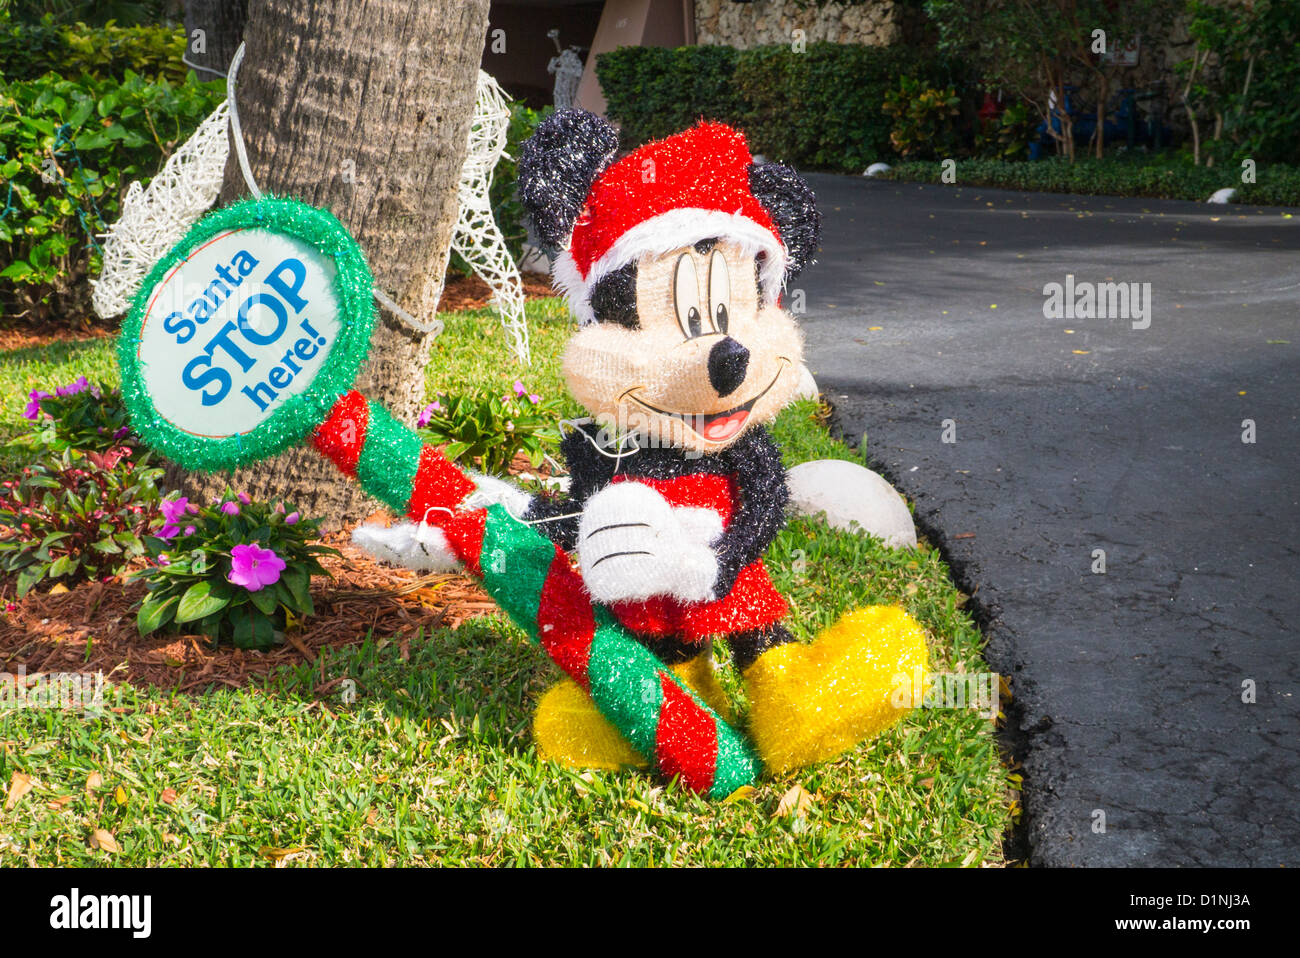 USA Florida Palm Beach Shores Mickey Maus Weihnachten Deko Figur - Santa  stop hier Leuchtreklame Palme Stockfotografie - Alamy